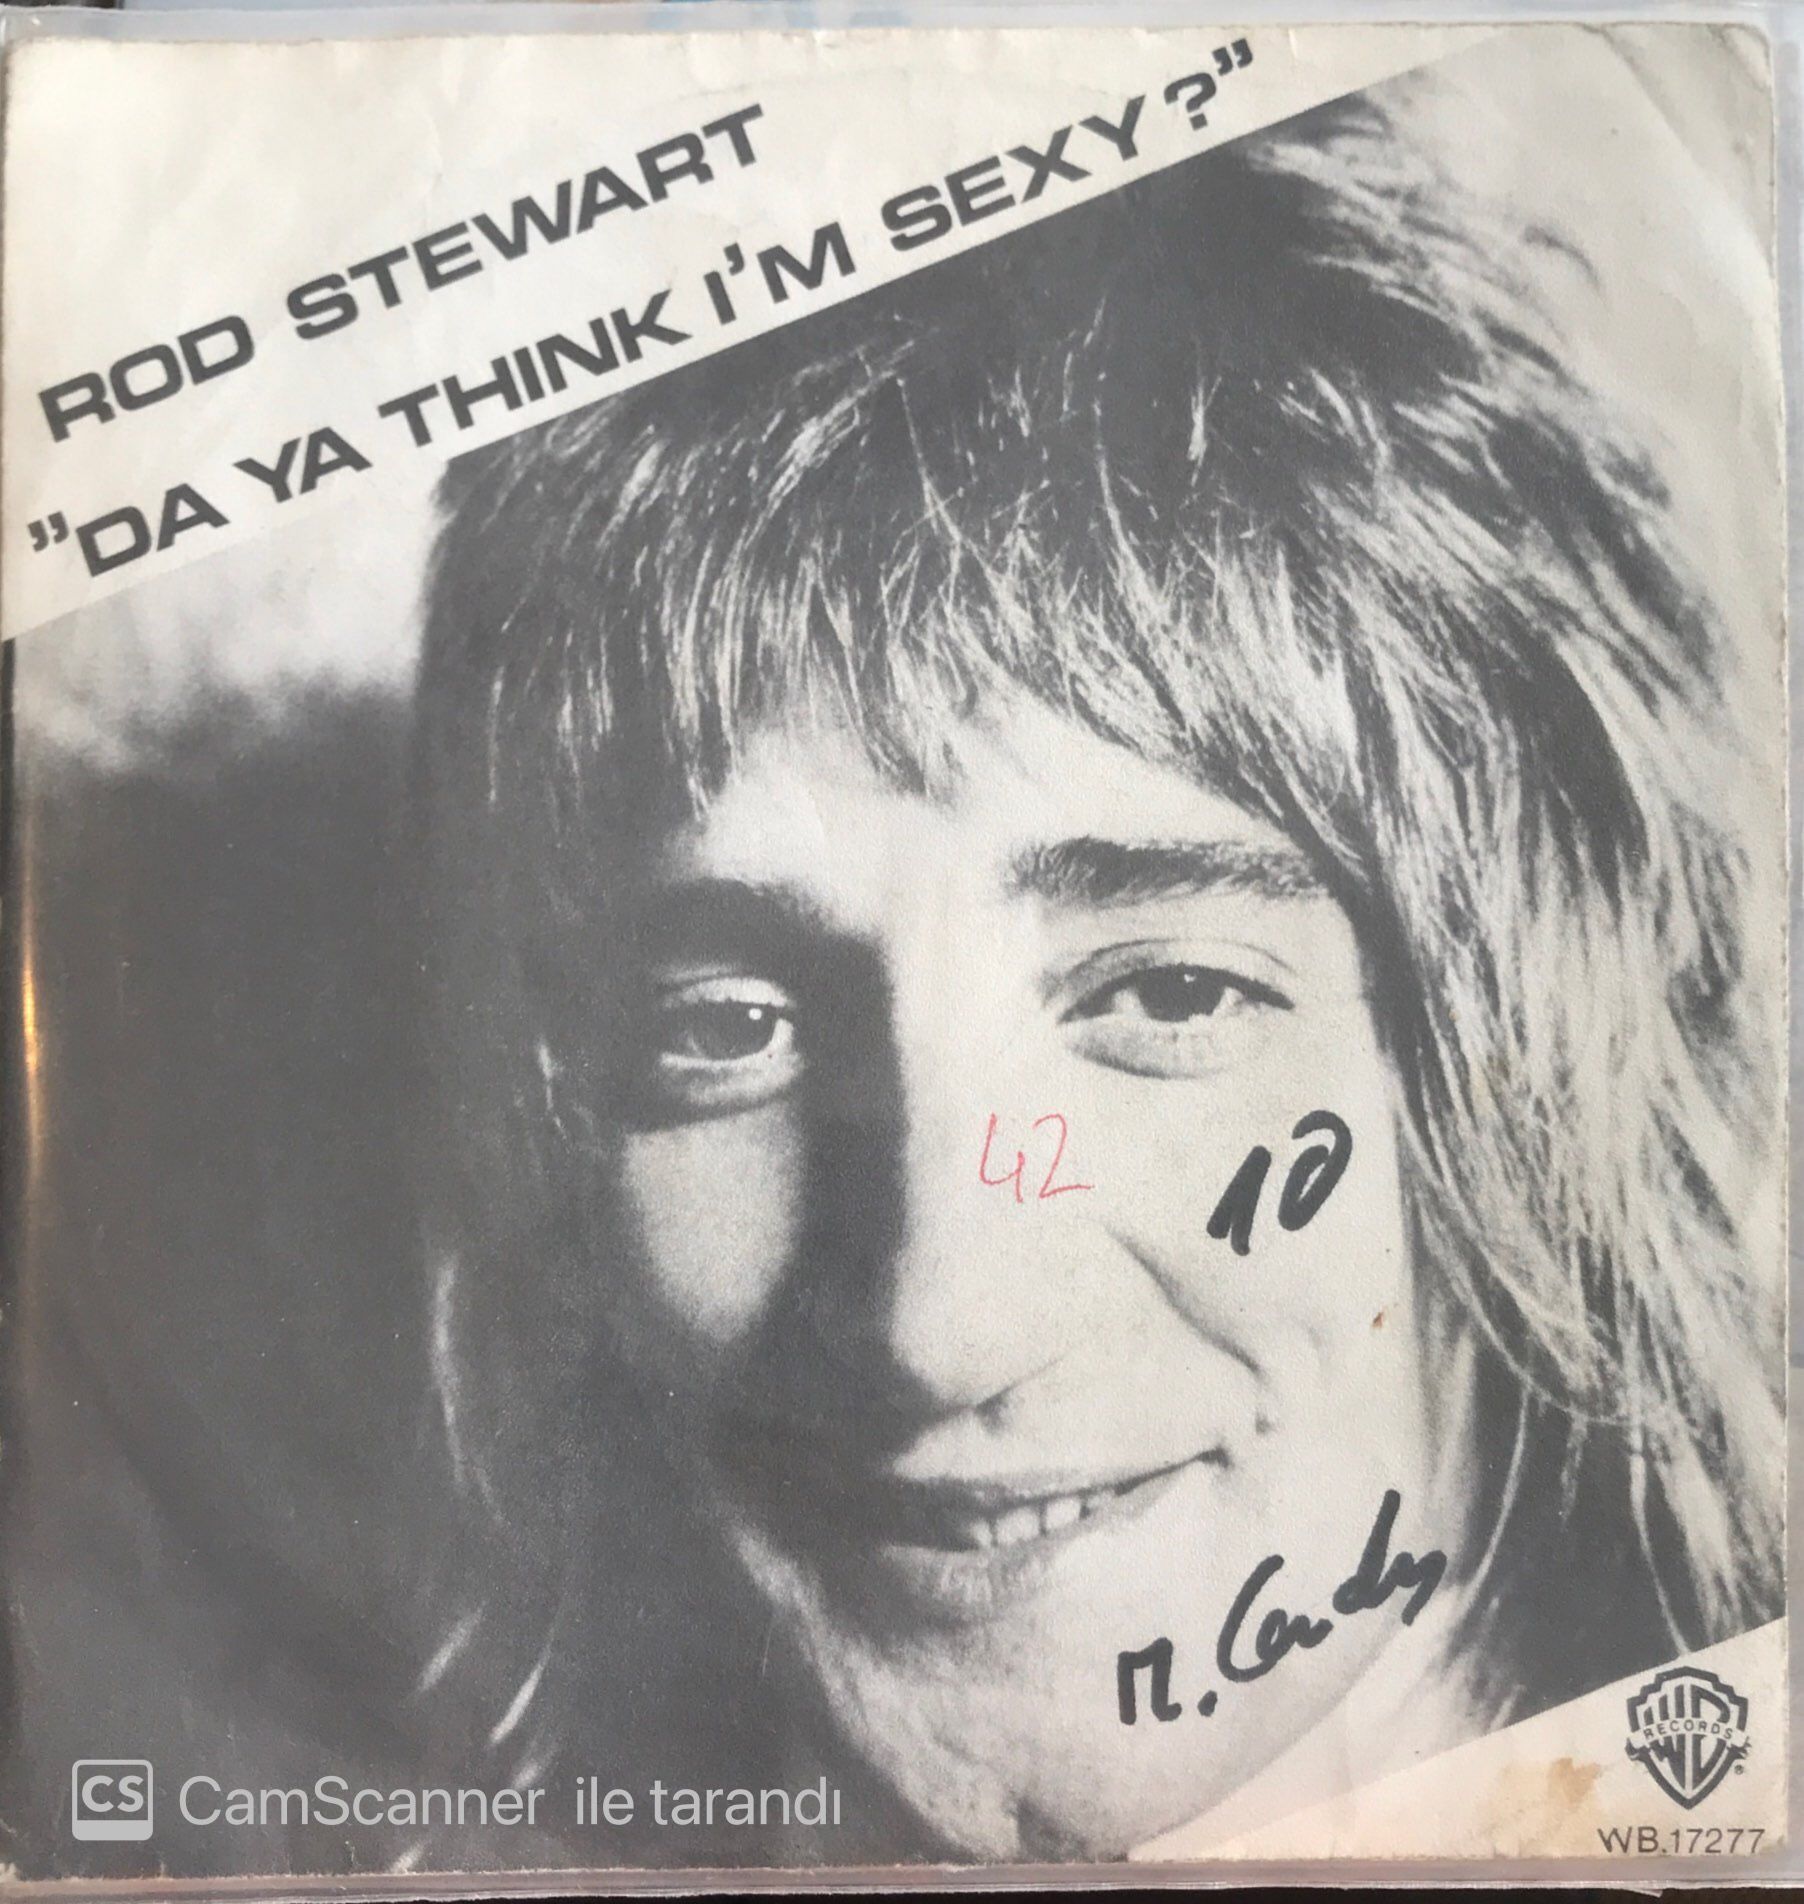 Rod Stewart - Da Ya Think I'm Sexy? 45lik